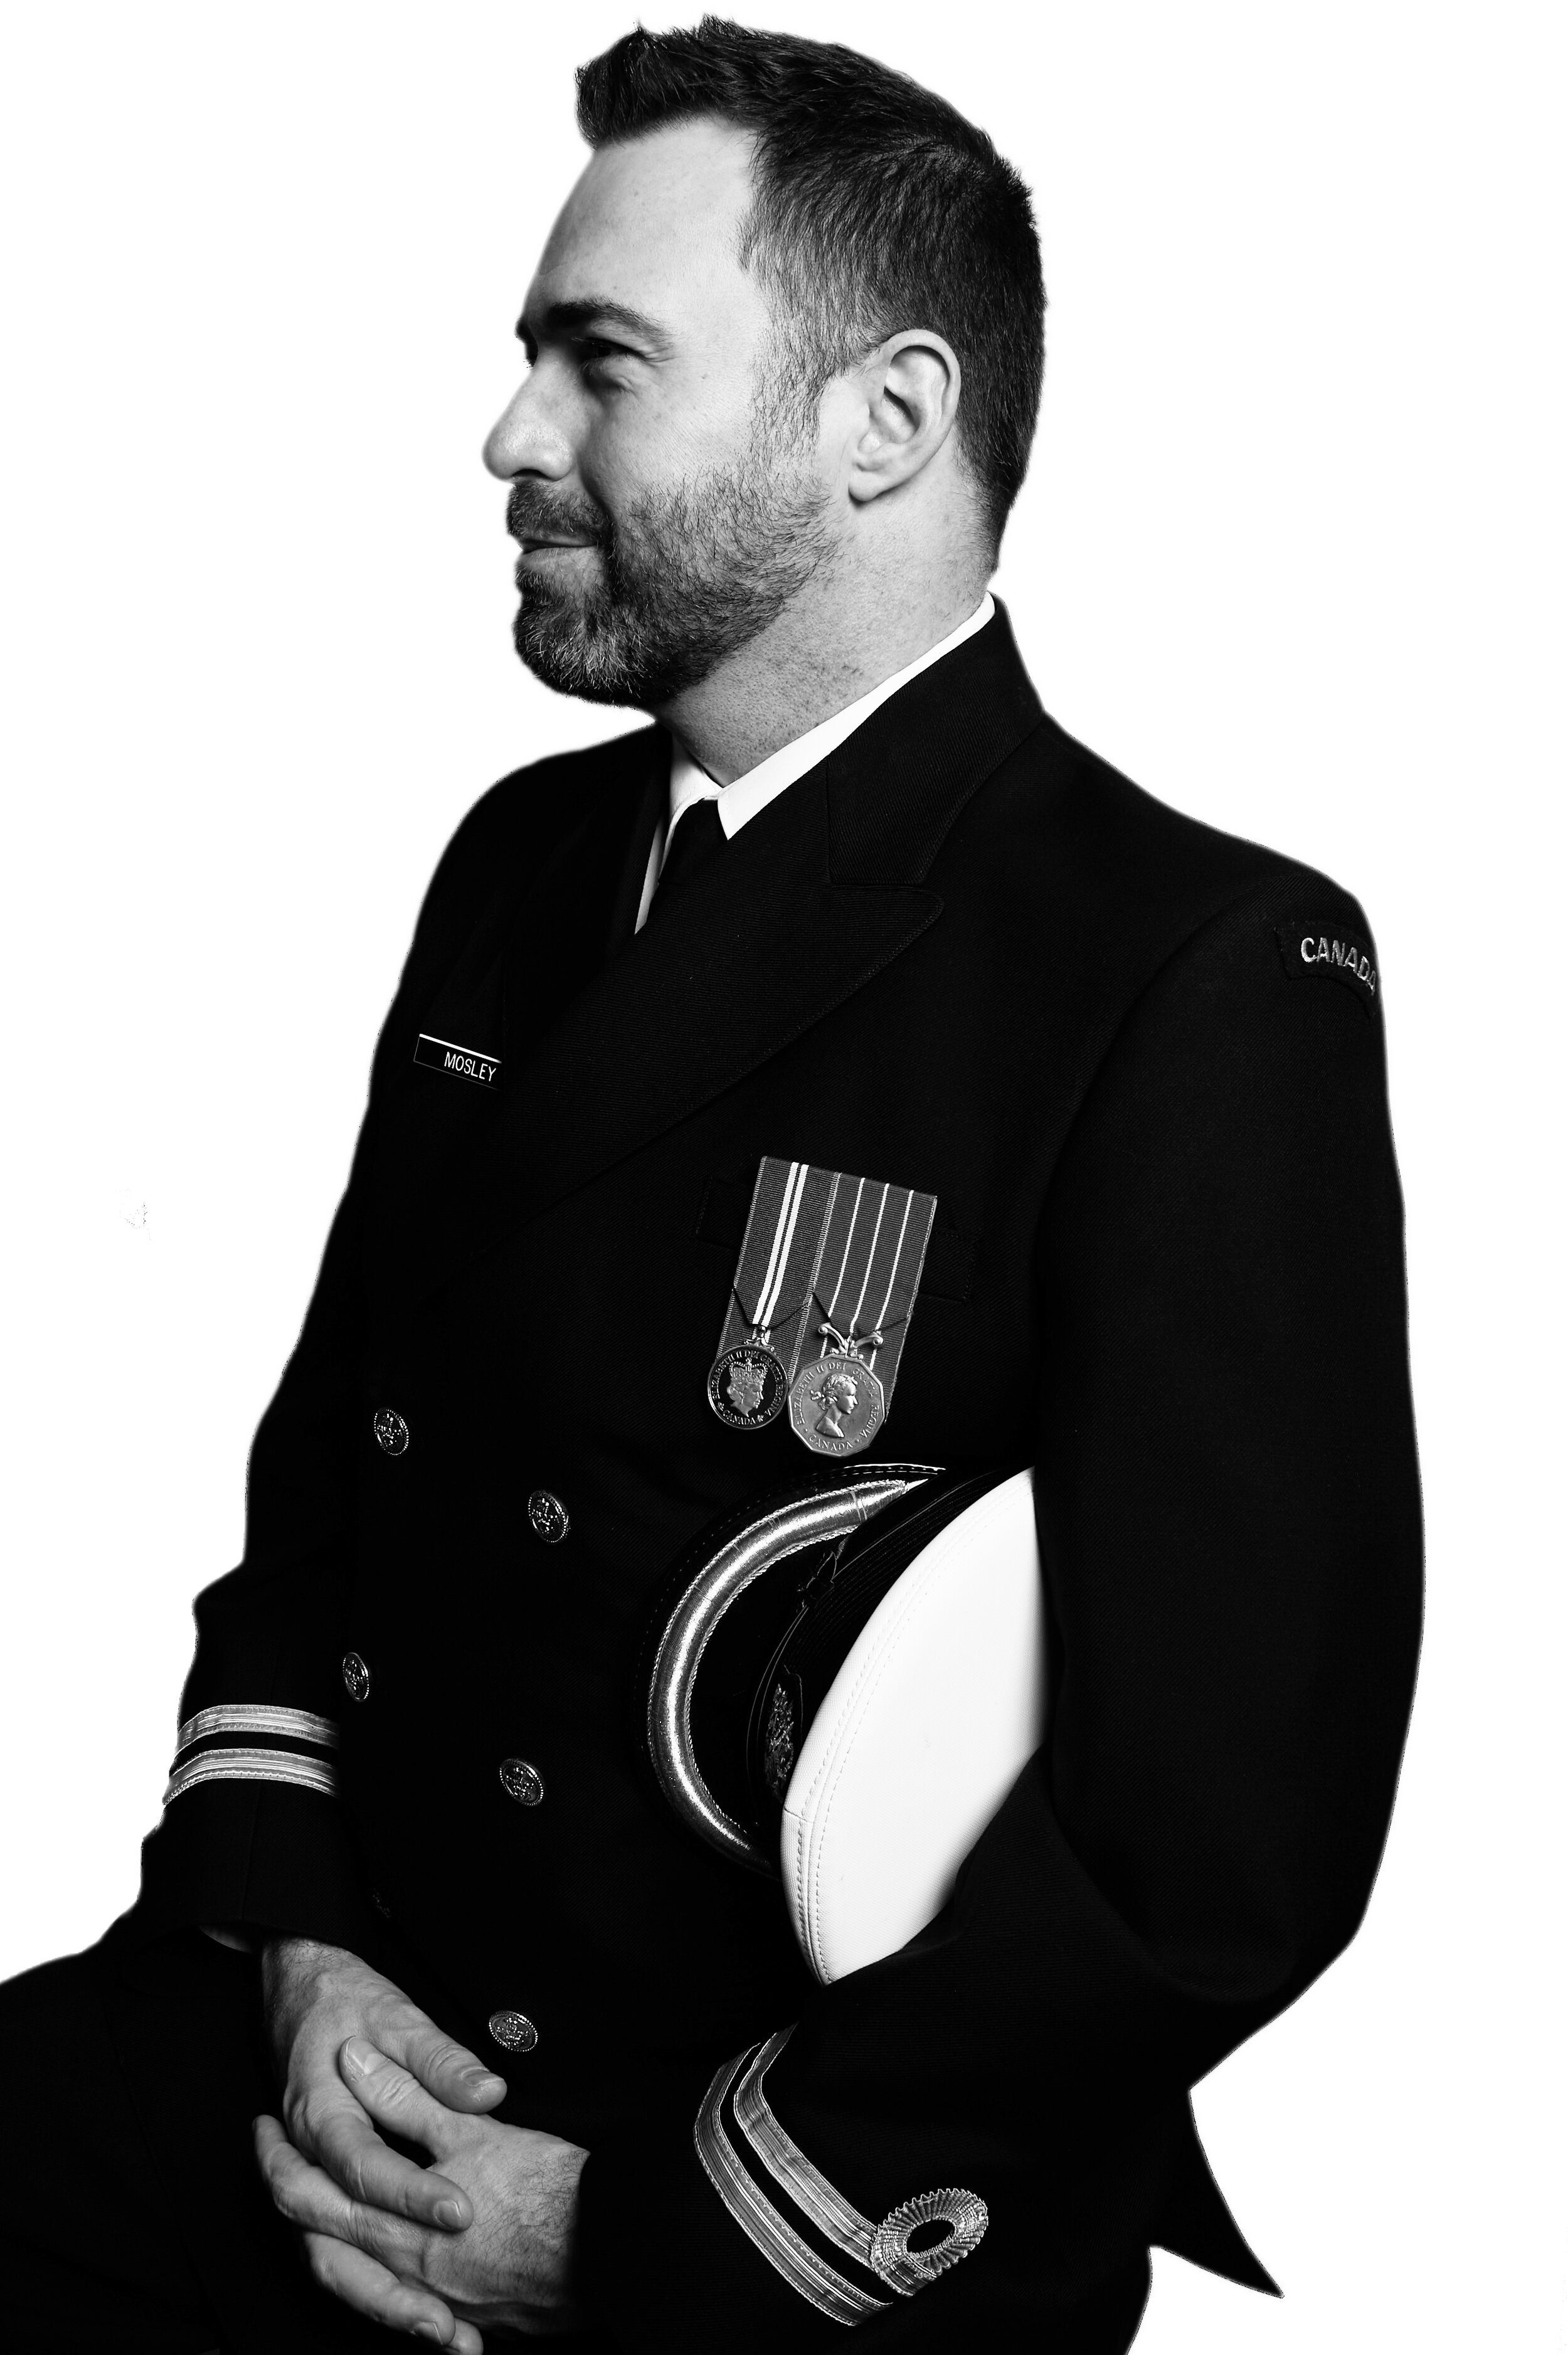 Lieutenant (N) Christian Mosley